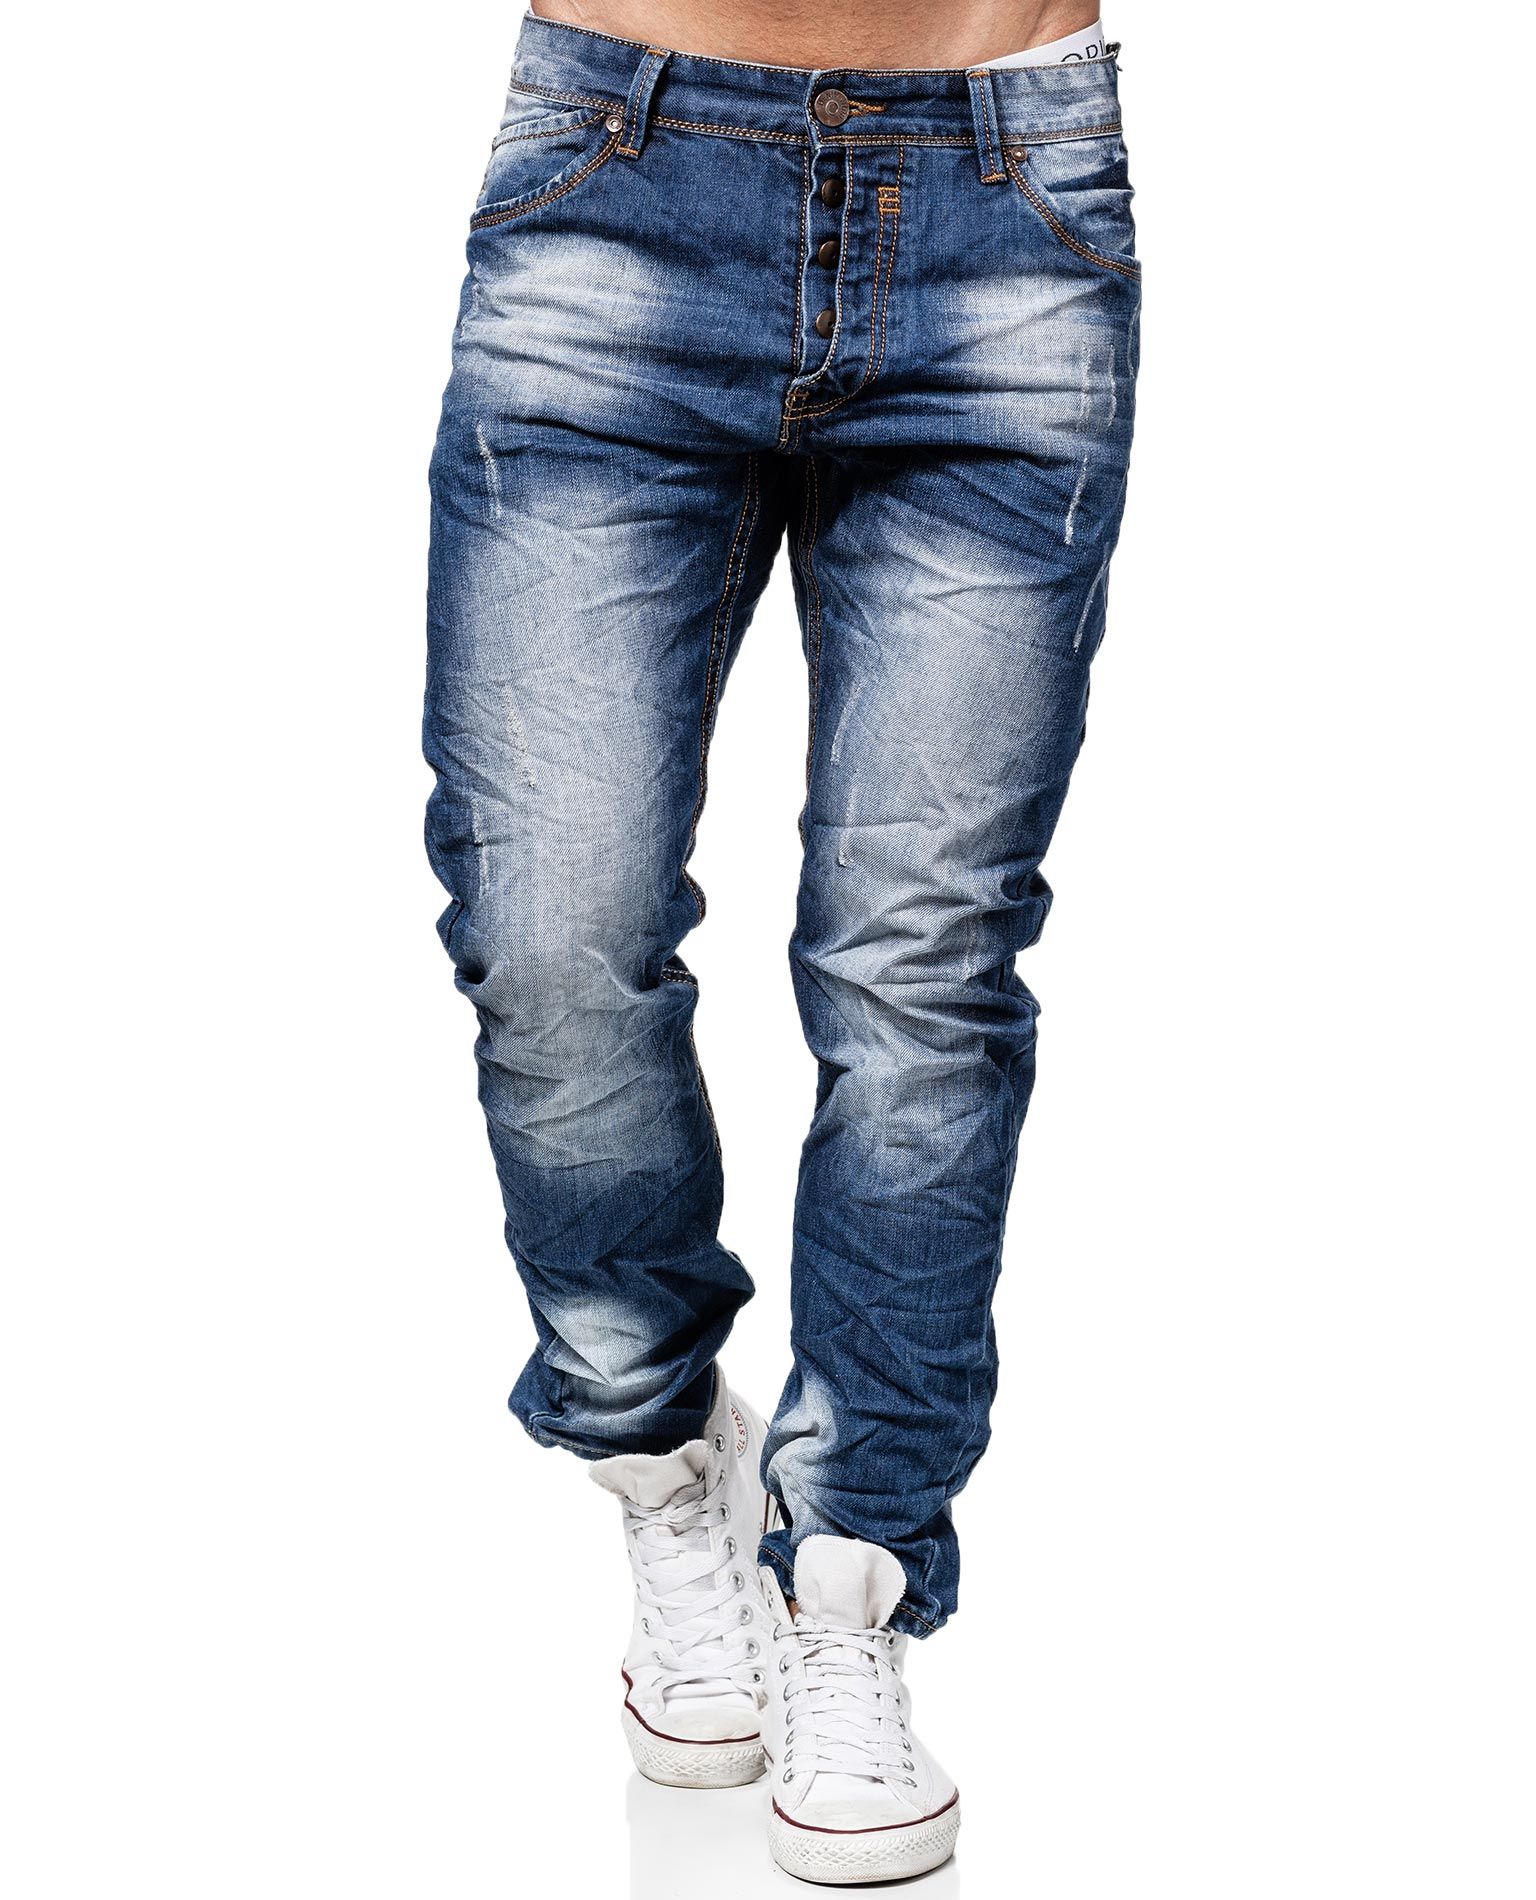 Justin Blue Jeans L32 - 03058 - Jeans - Jerone.com